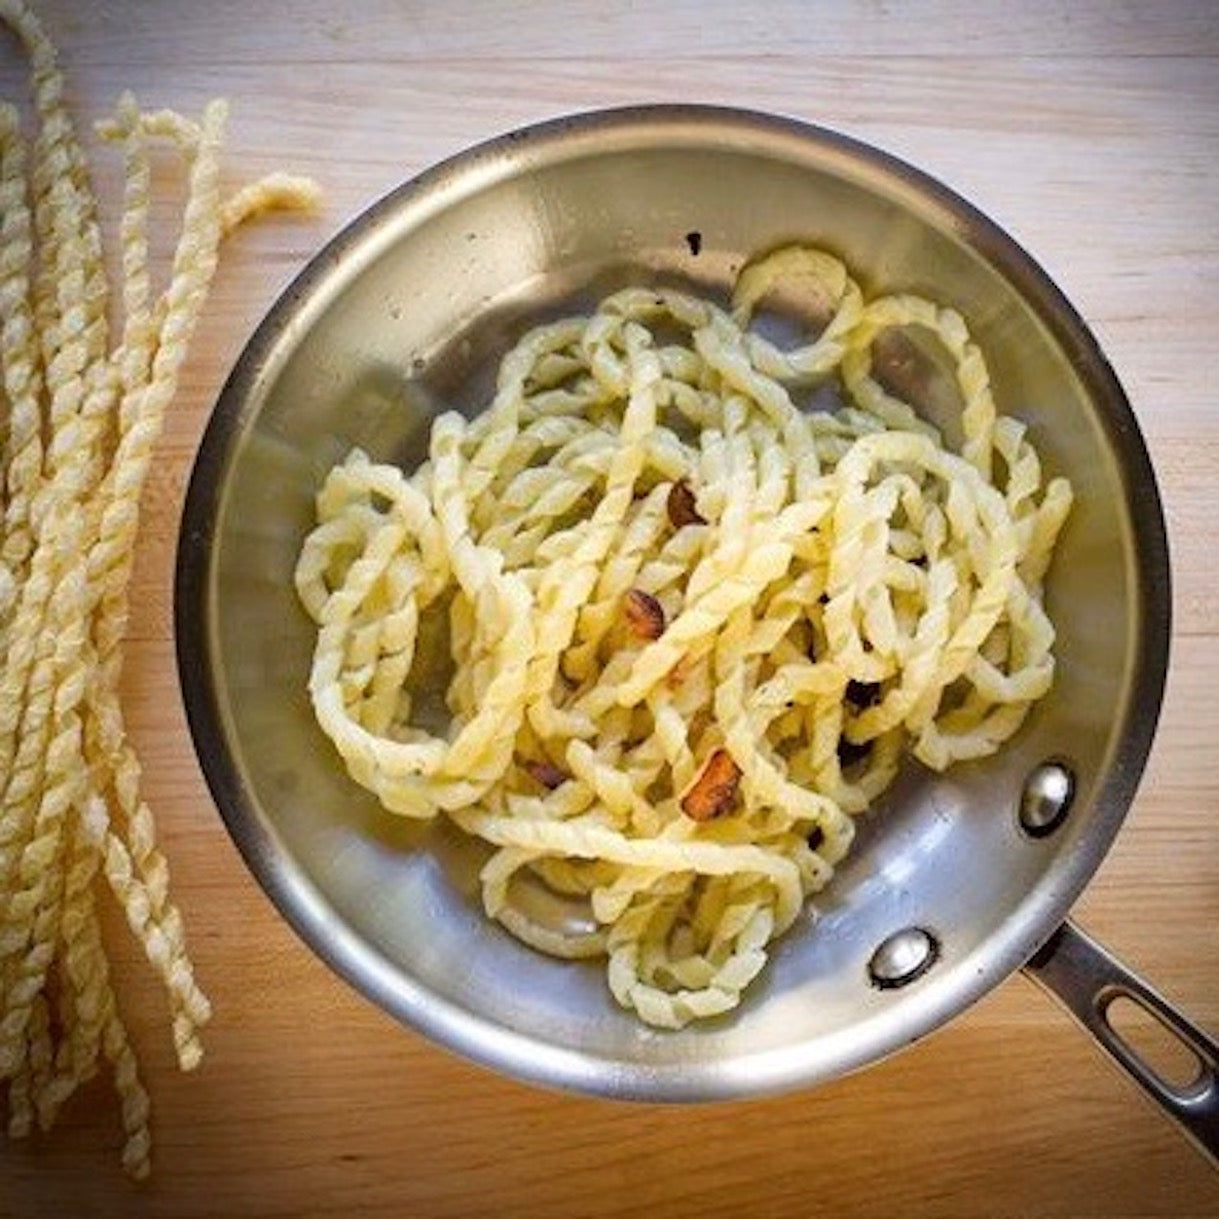 fusilli-pasta-garofalo-online-delivery-singapore-the-new-grocer